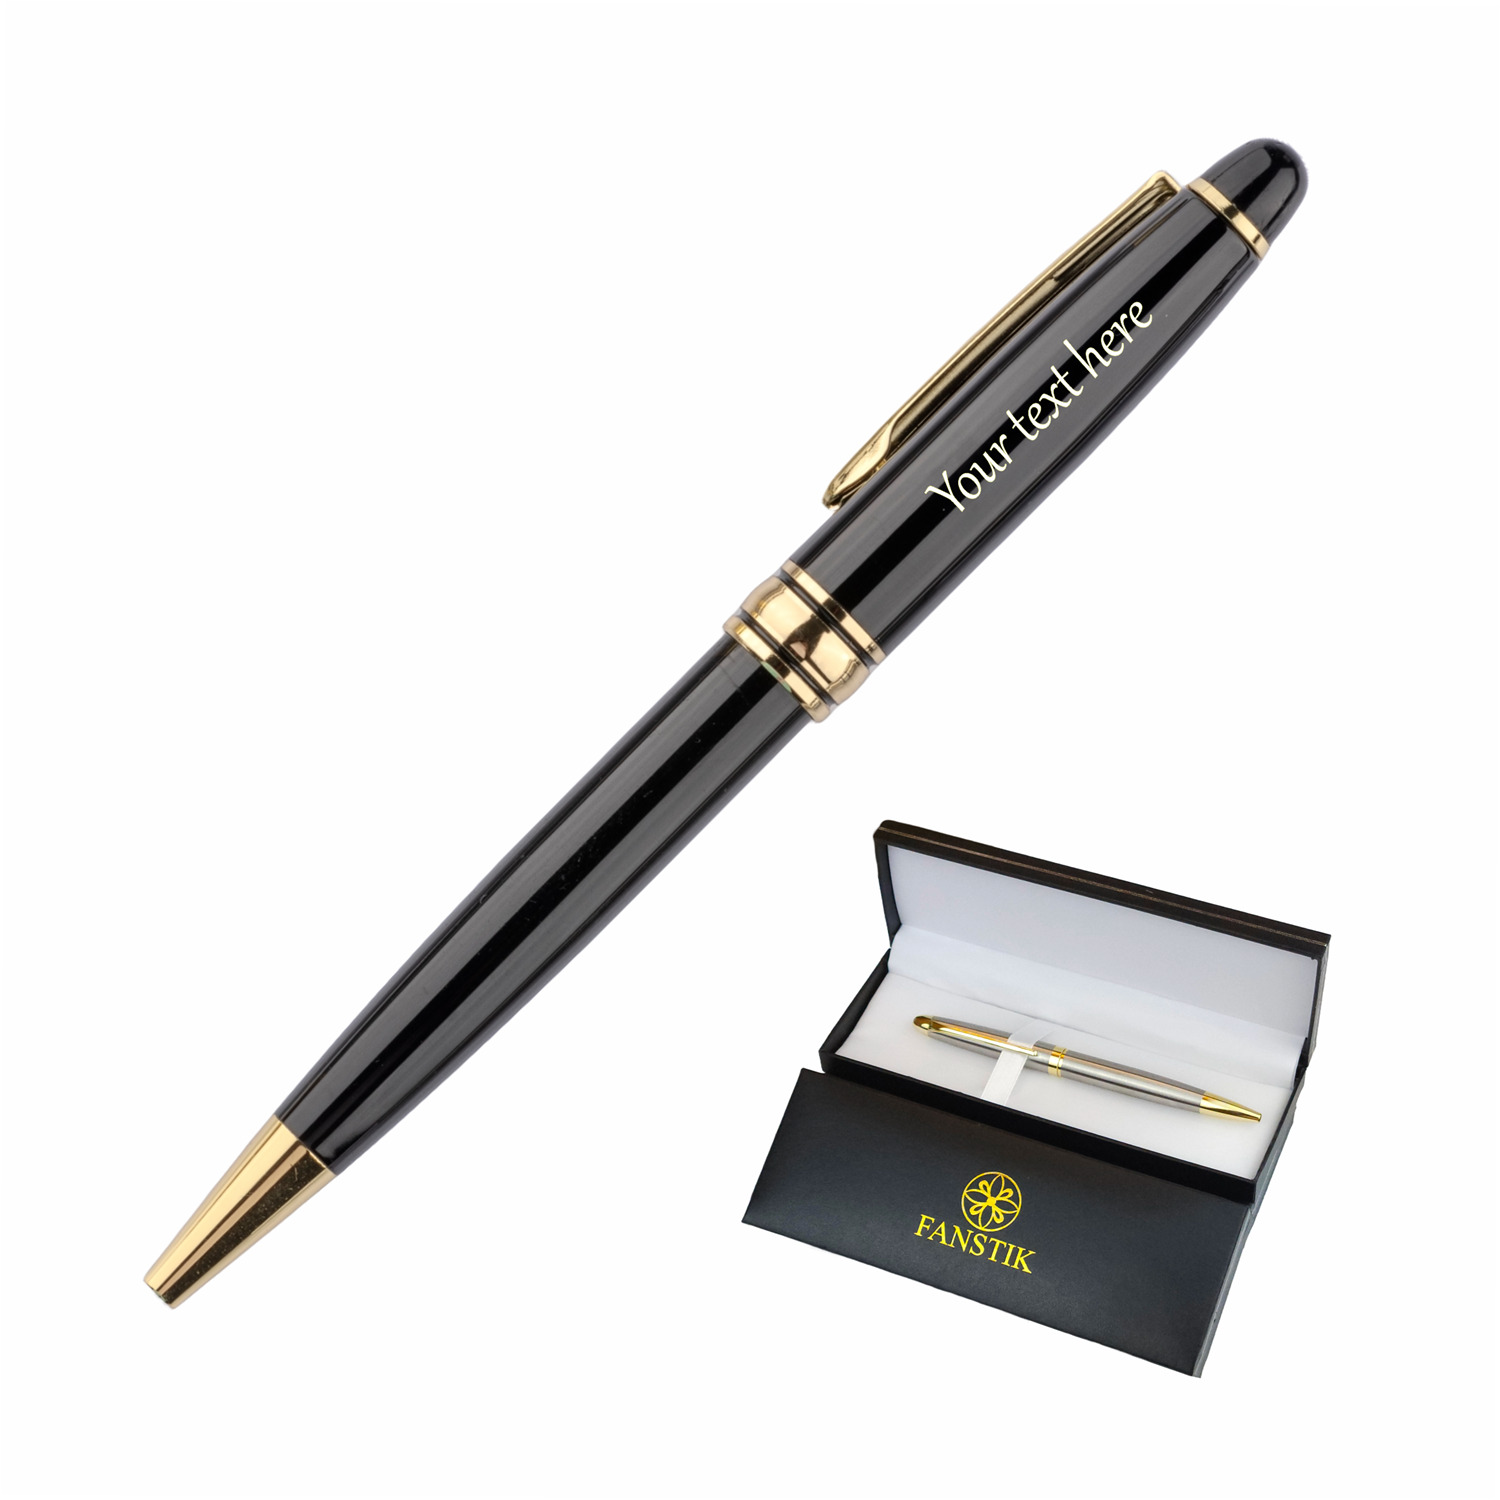 Personalized Pen, Elegant Engraved Pen. Luxury Customized Black and Gold Pen